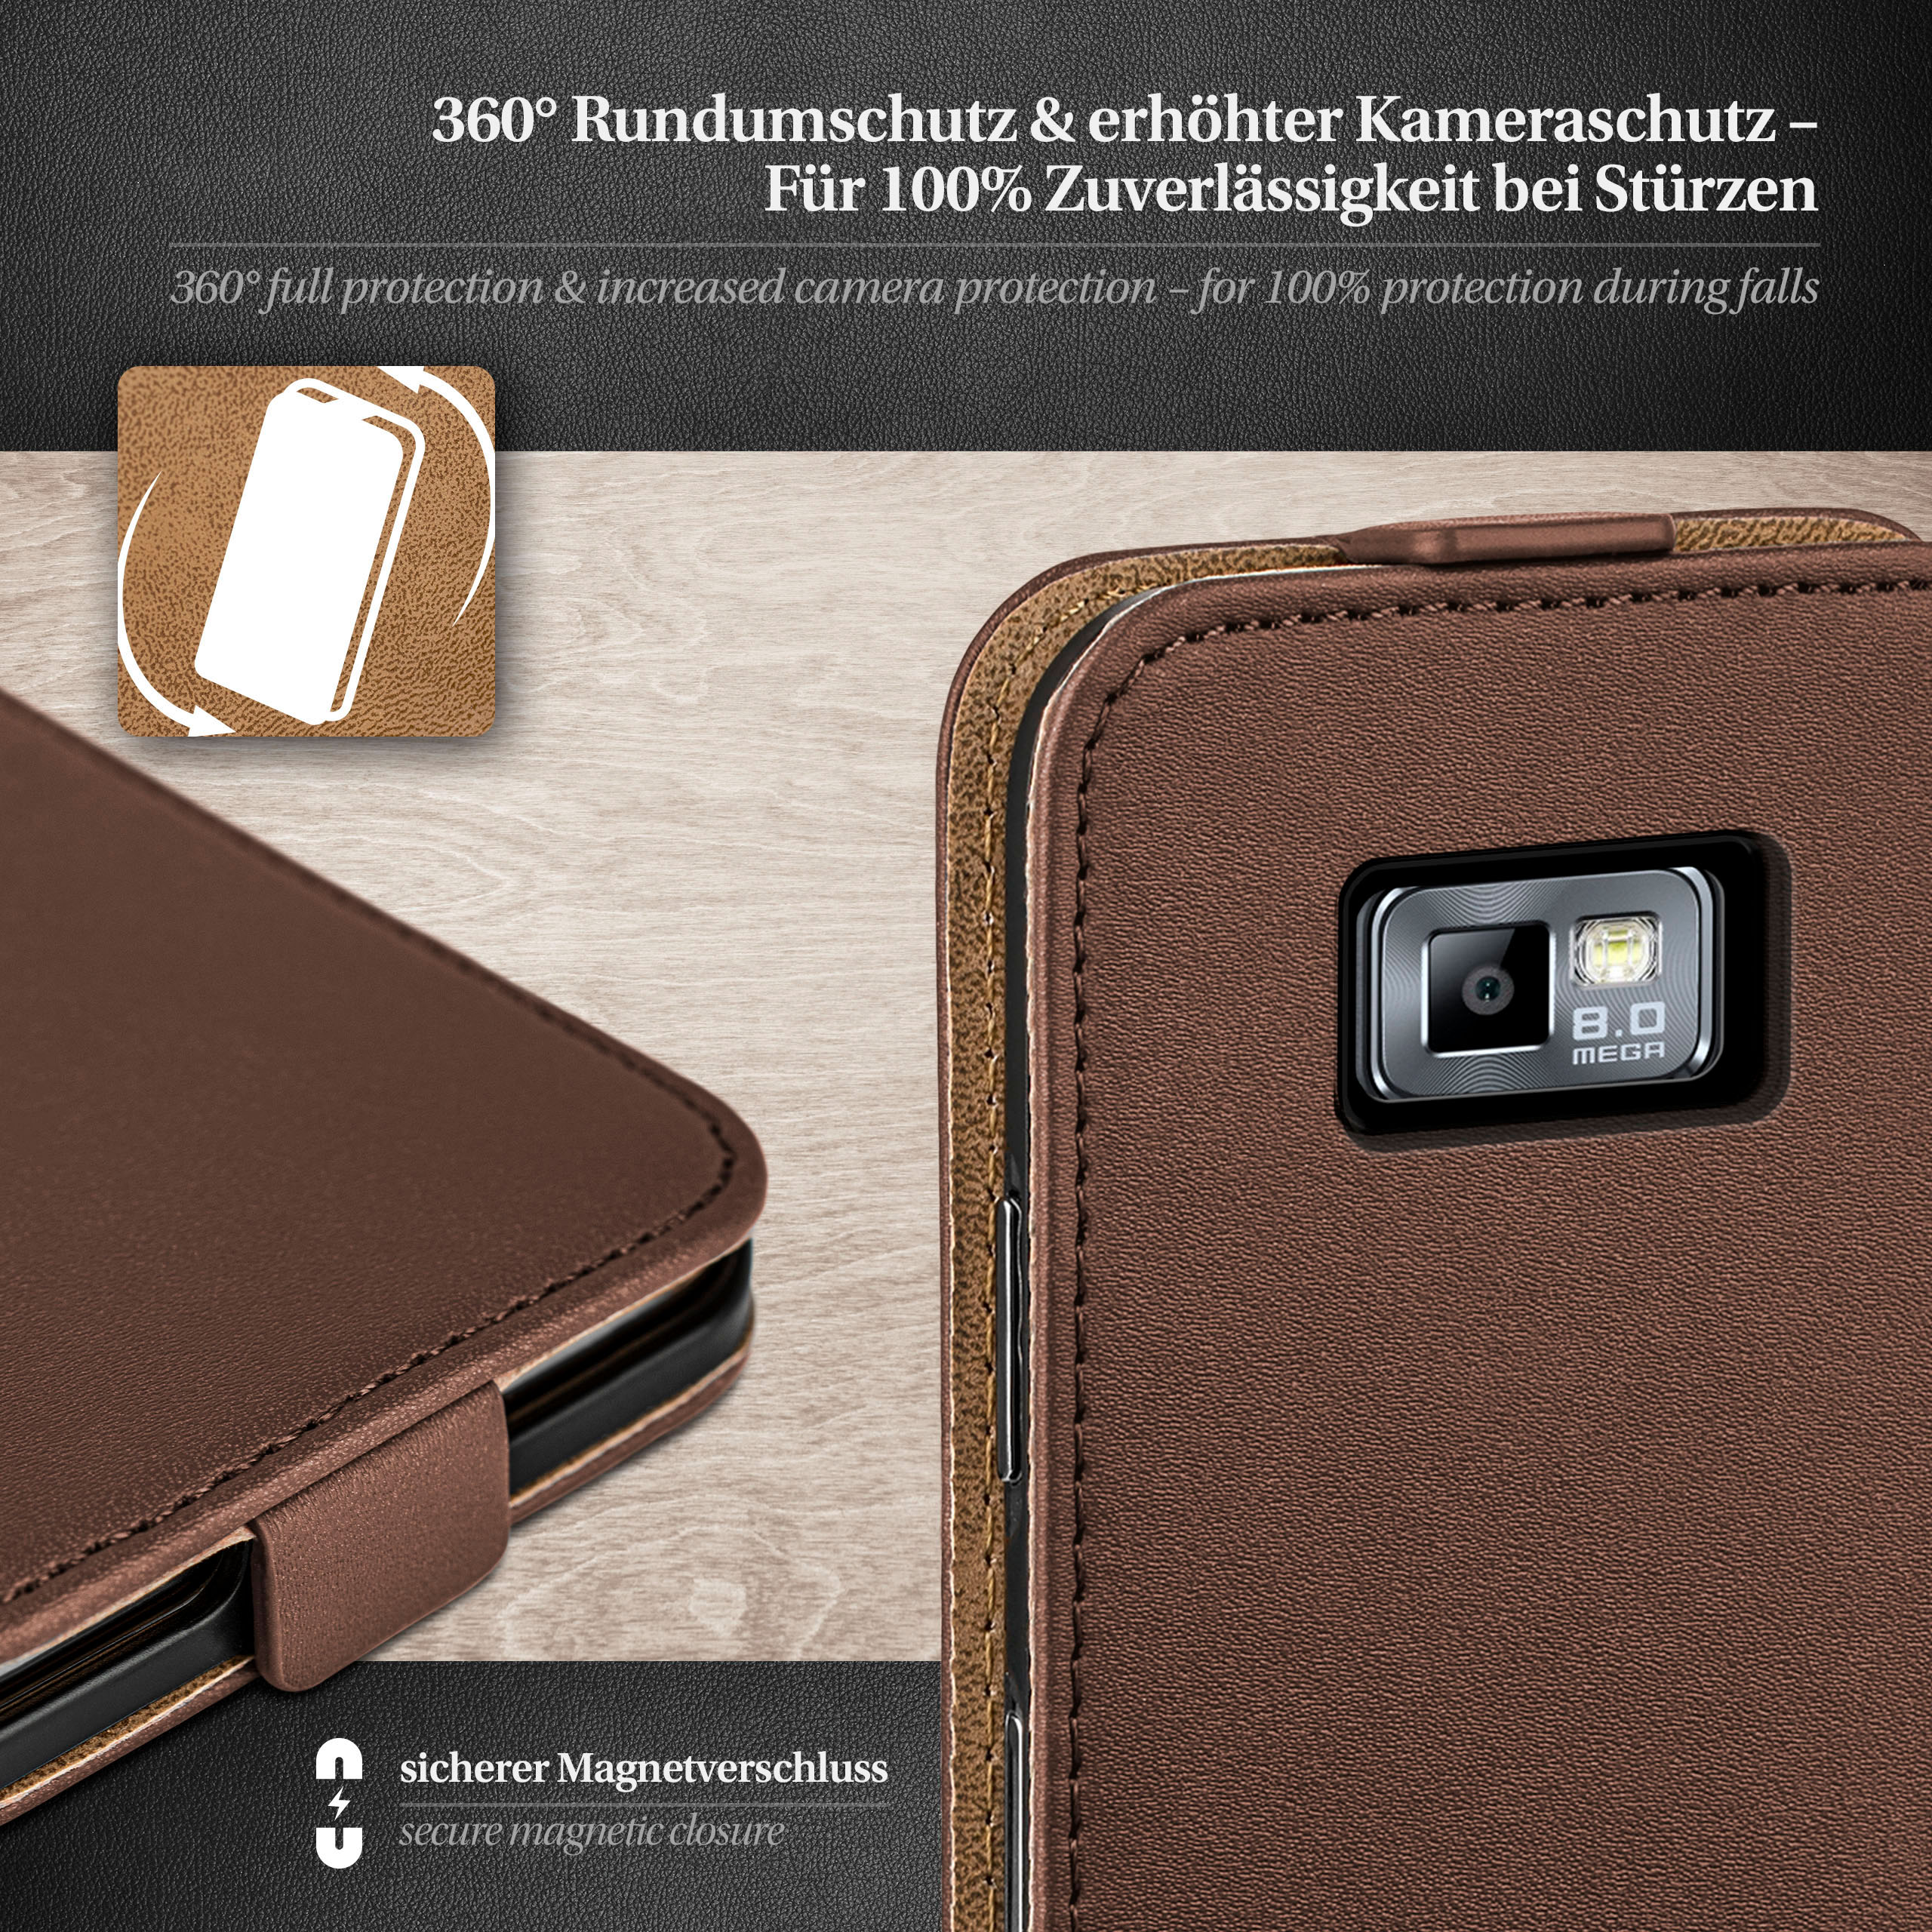 Plus, Cover, S2 Samsung, MOEX / Oxide-Brown Case, S2 Flip Galaxy Flip